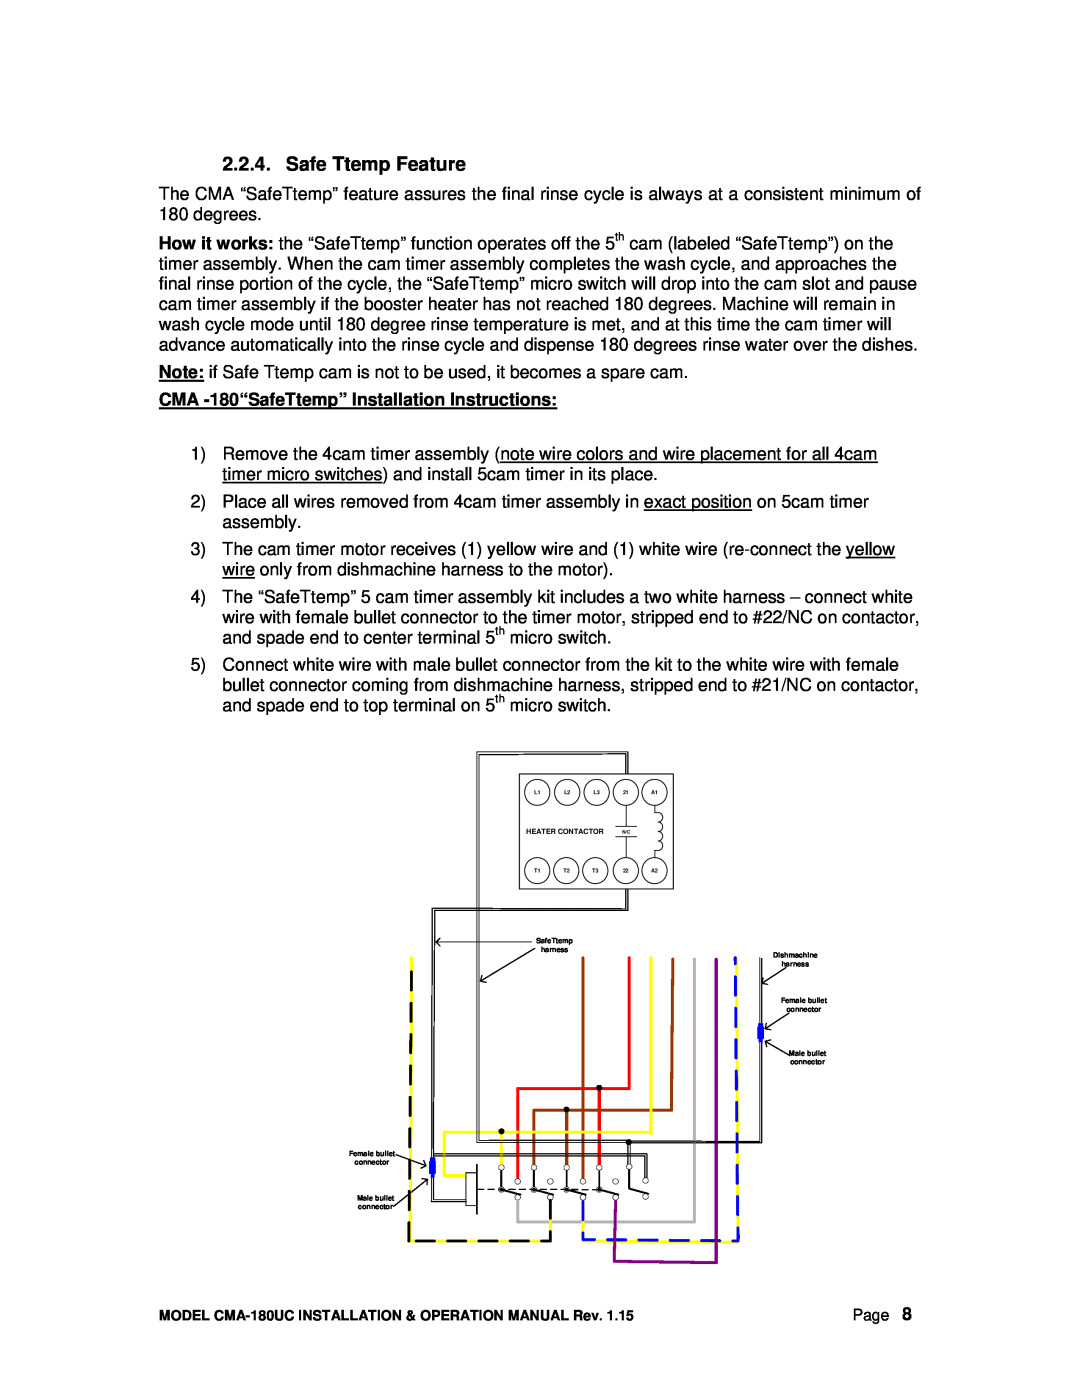 CMA Dishmachines CMA-180UC manual Safe Ttemp Feature, CMA -180“SafeTtemp” Installation Instructions 